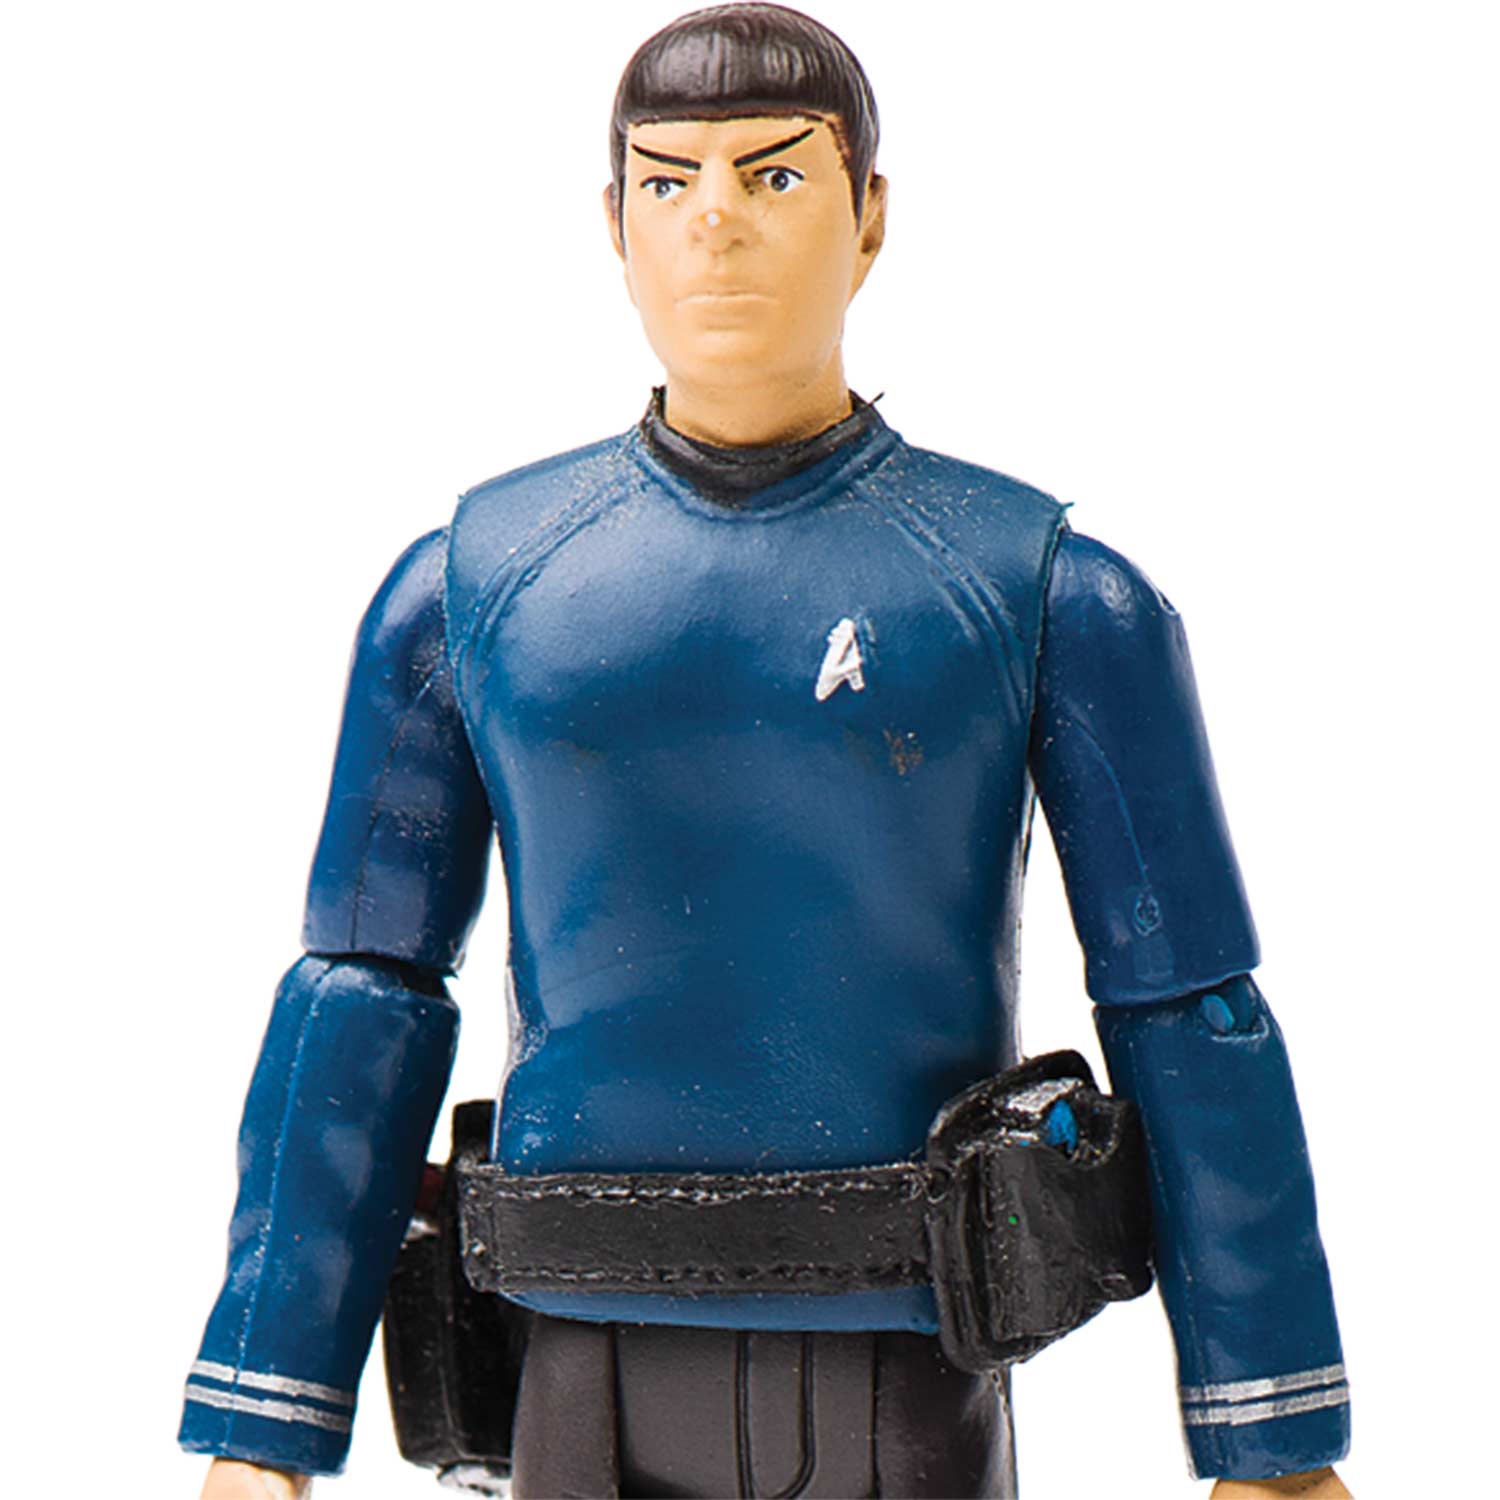 image of a spock figurine